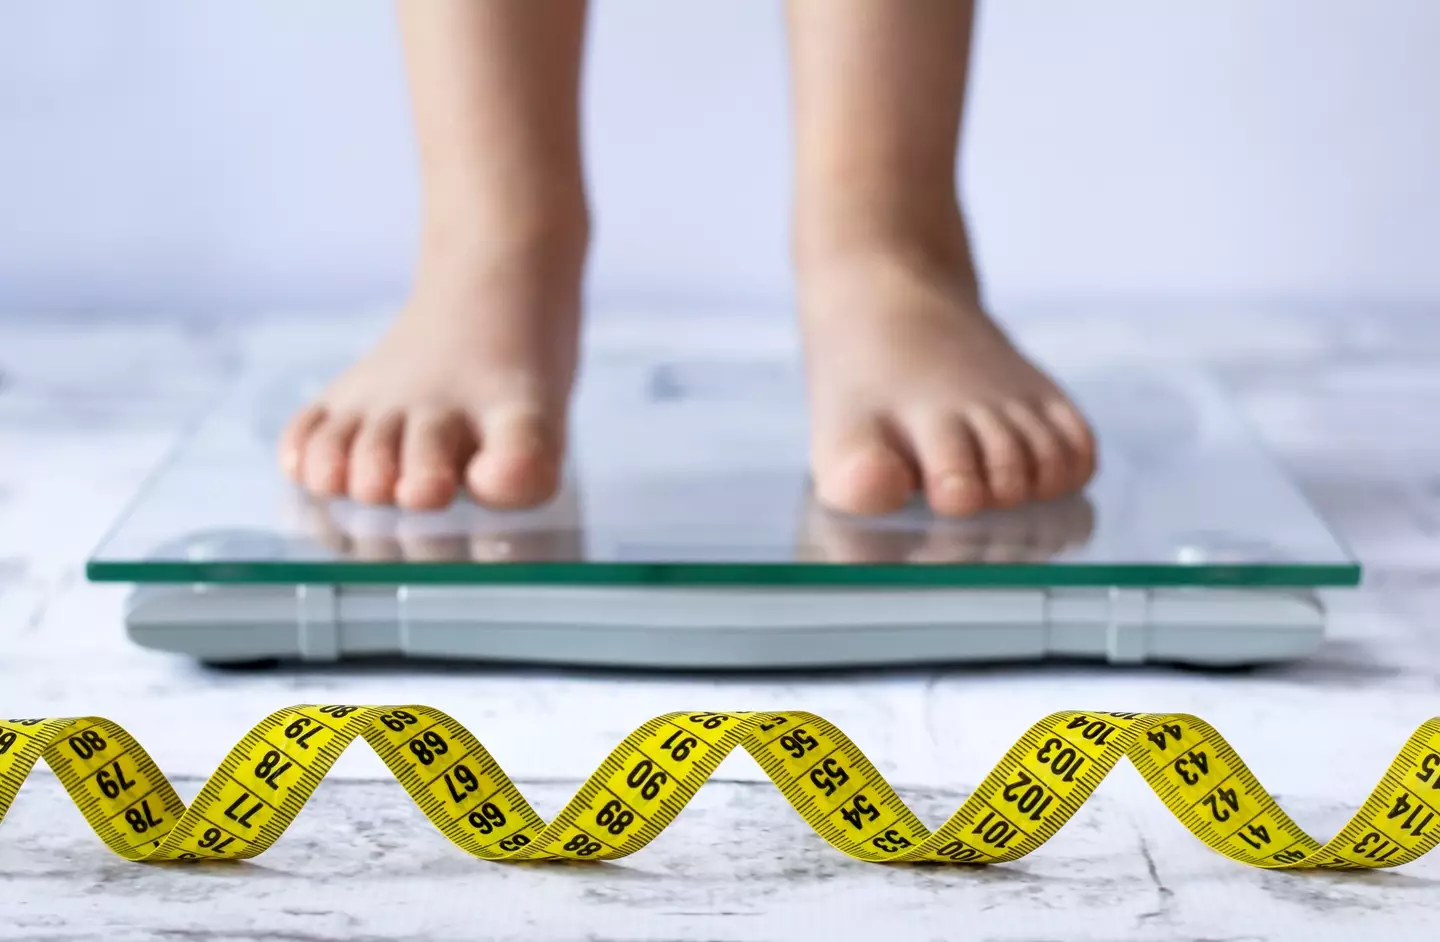 A mum has sparked debate online after revealing she judges overweight children at her kids' school.